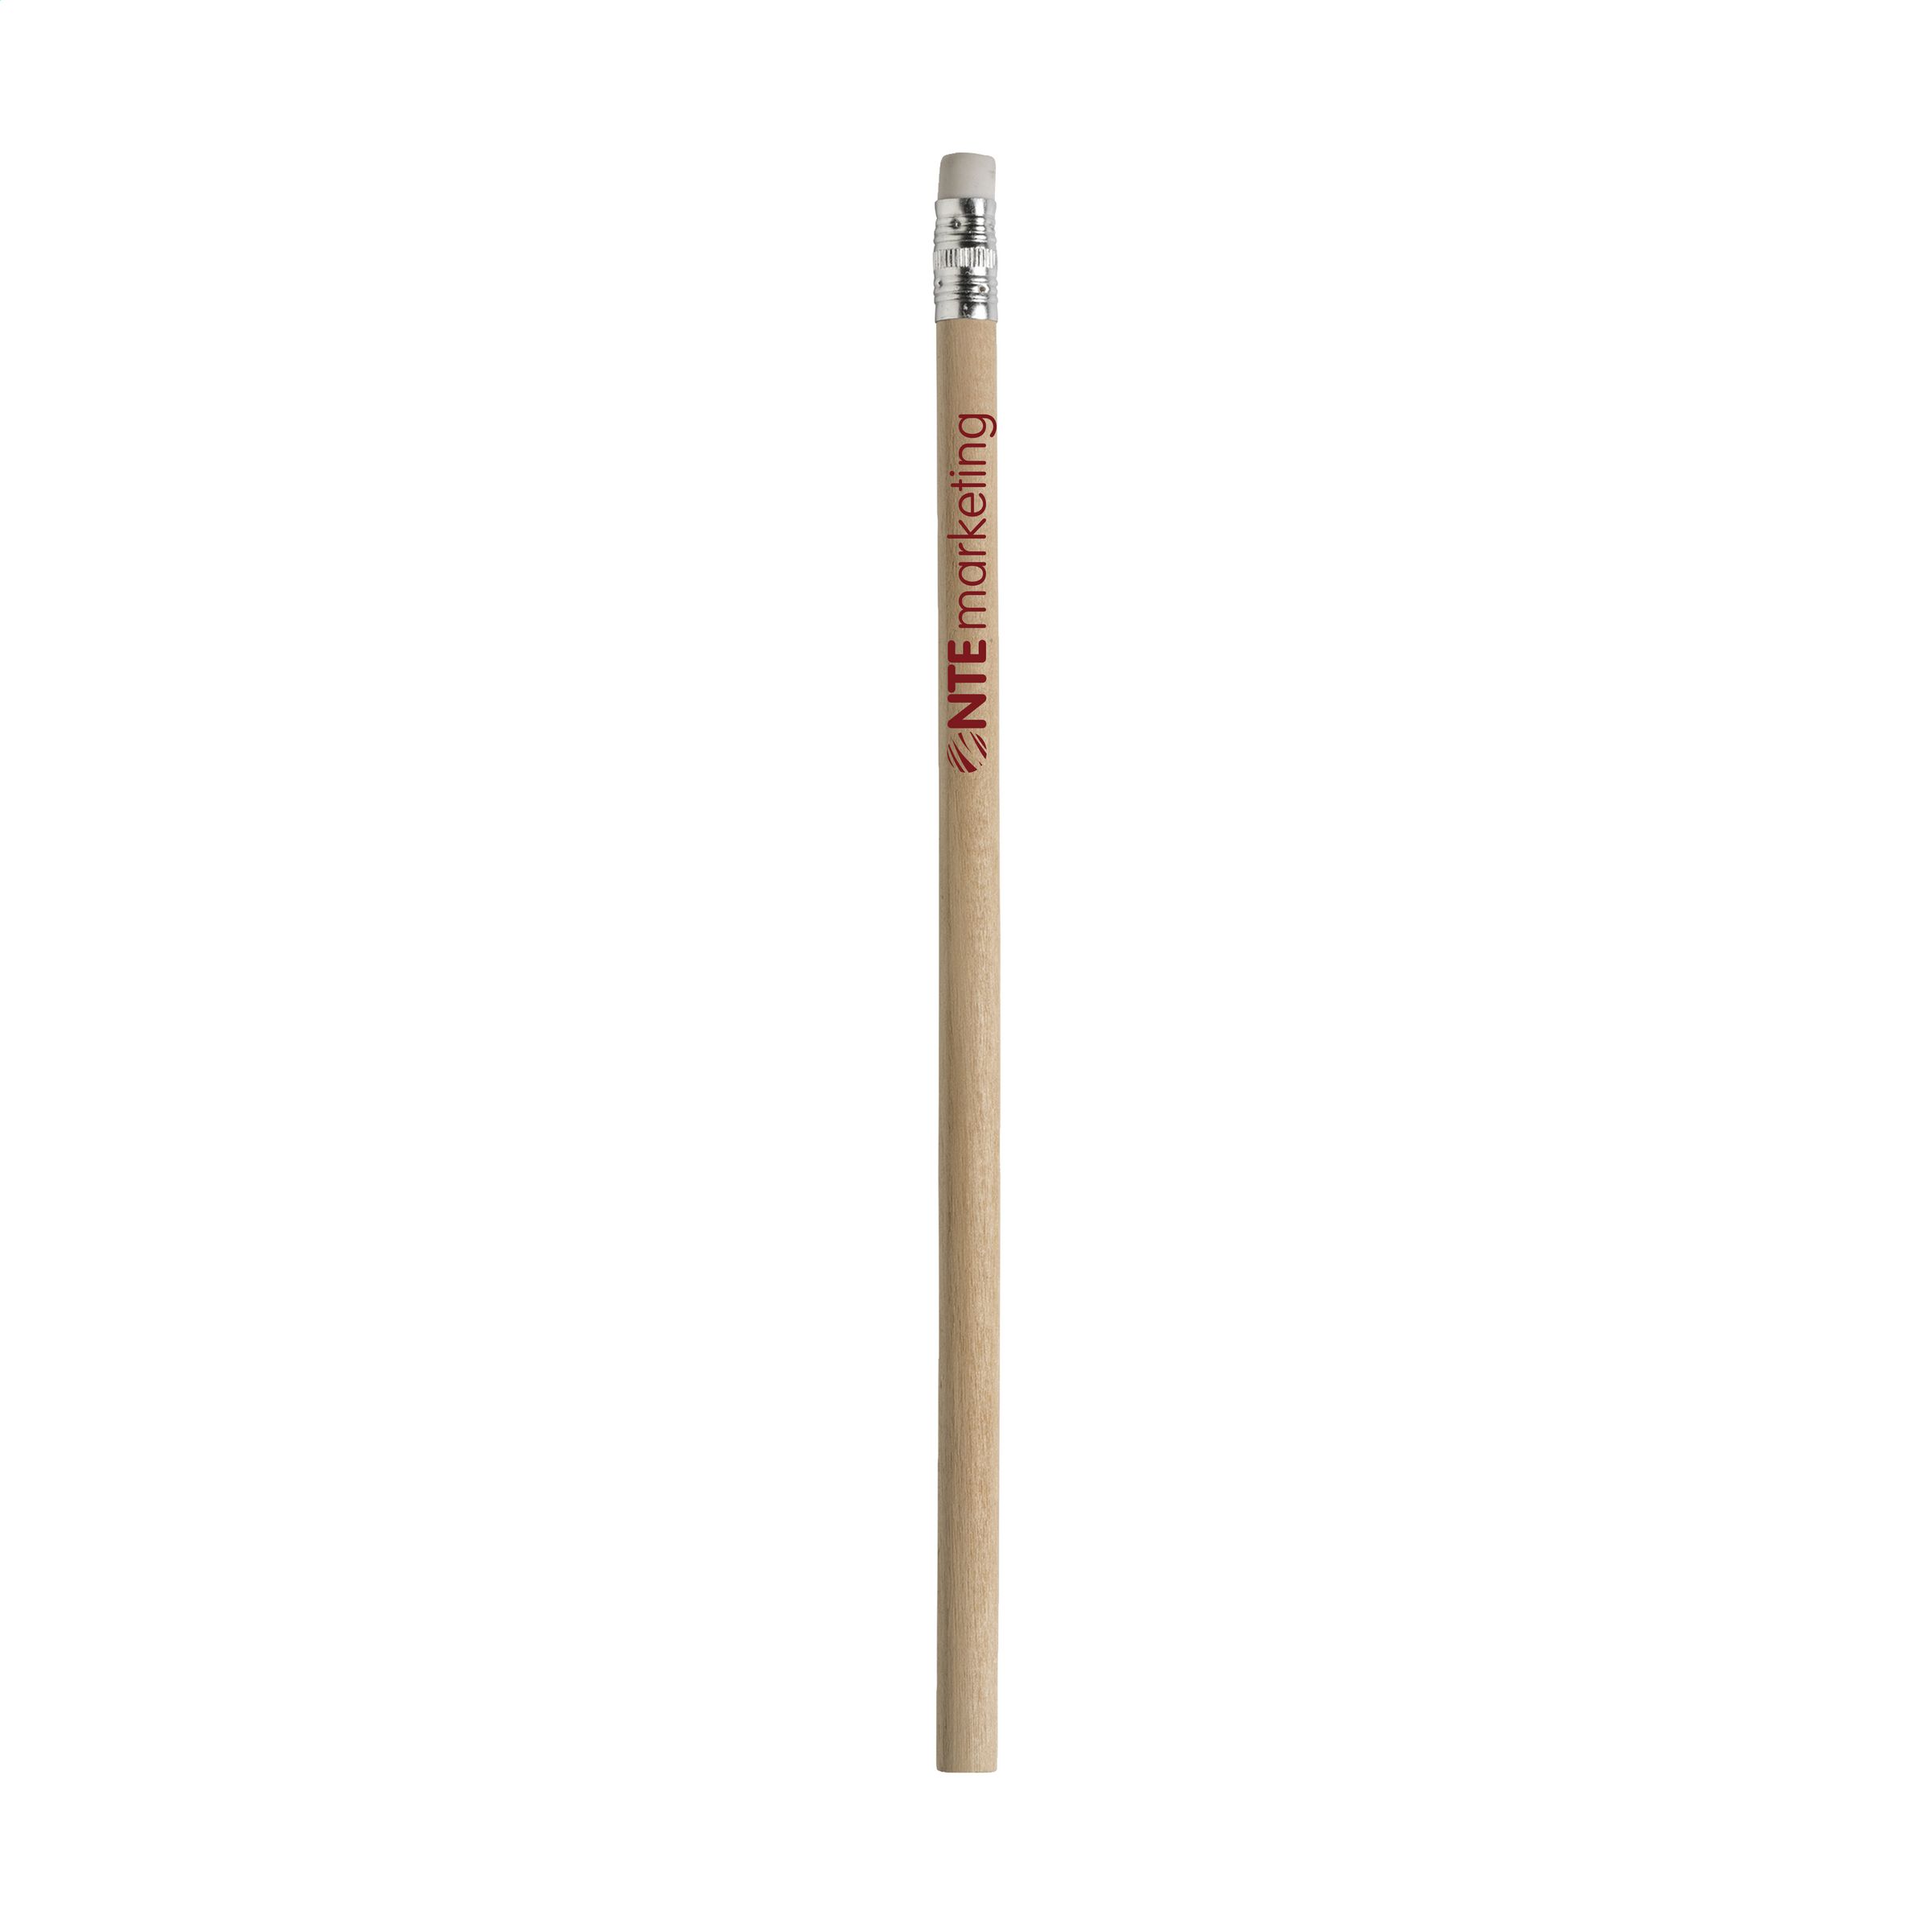 Crayon en bois non vernis HB non taillé avec gomme - Féchain - Zaprinta Belgique